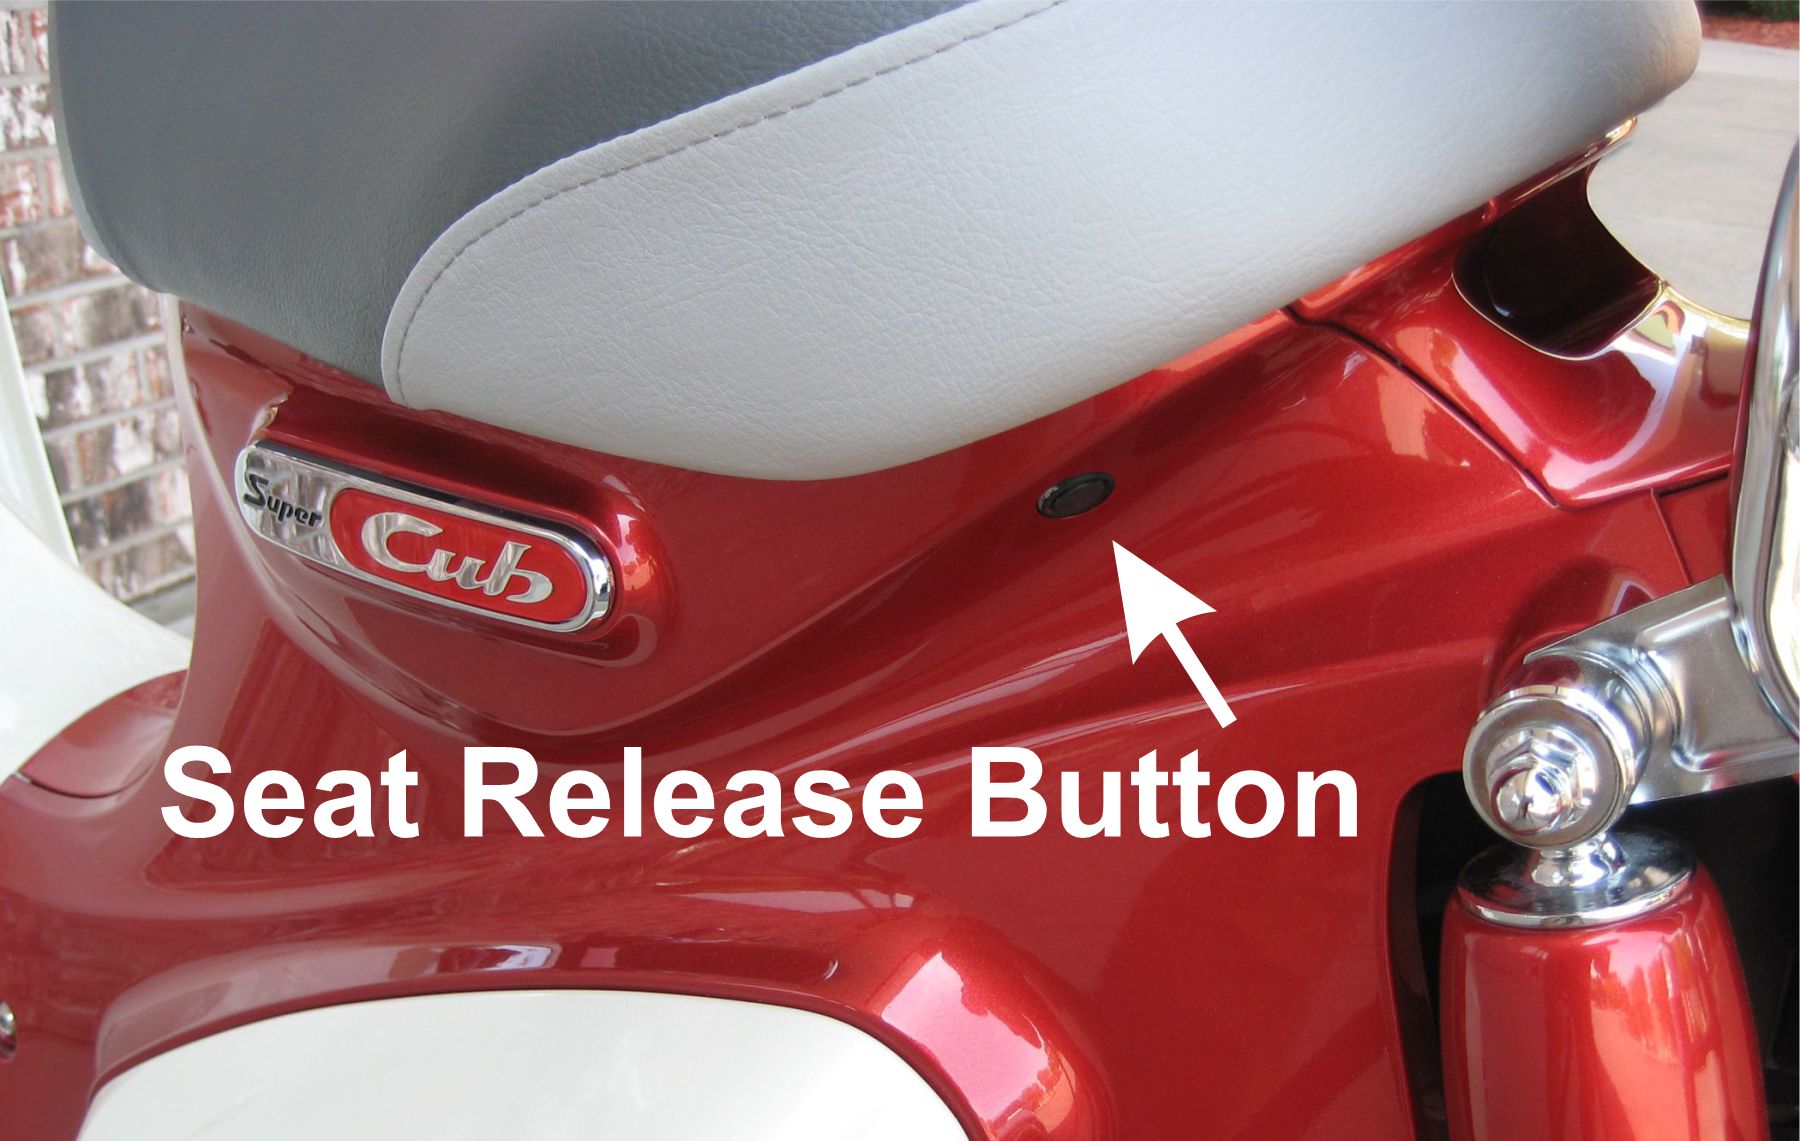 Seat release button underneath Super Cub seat